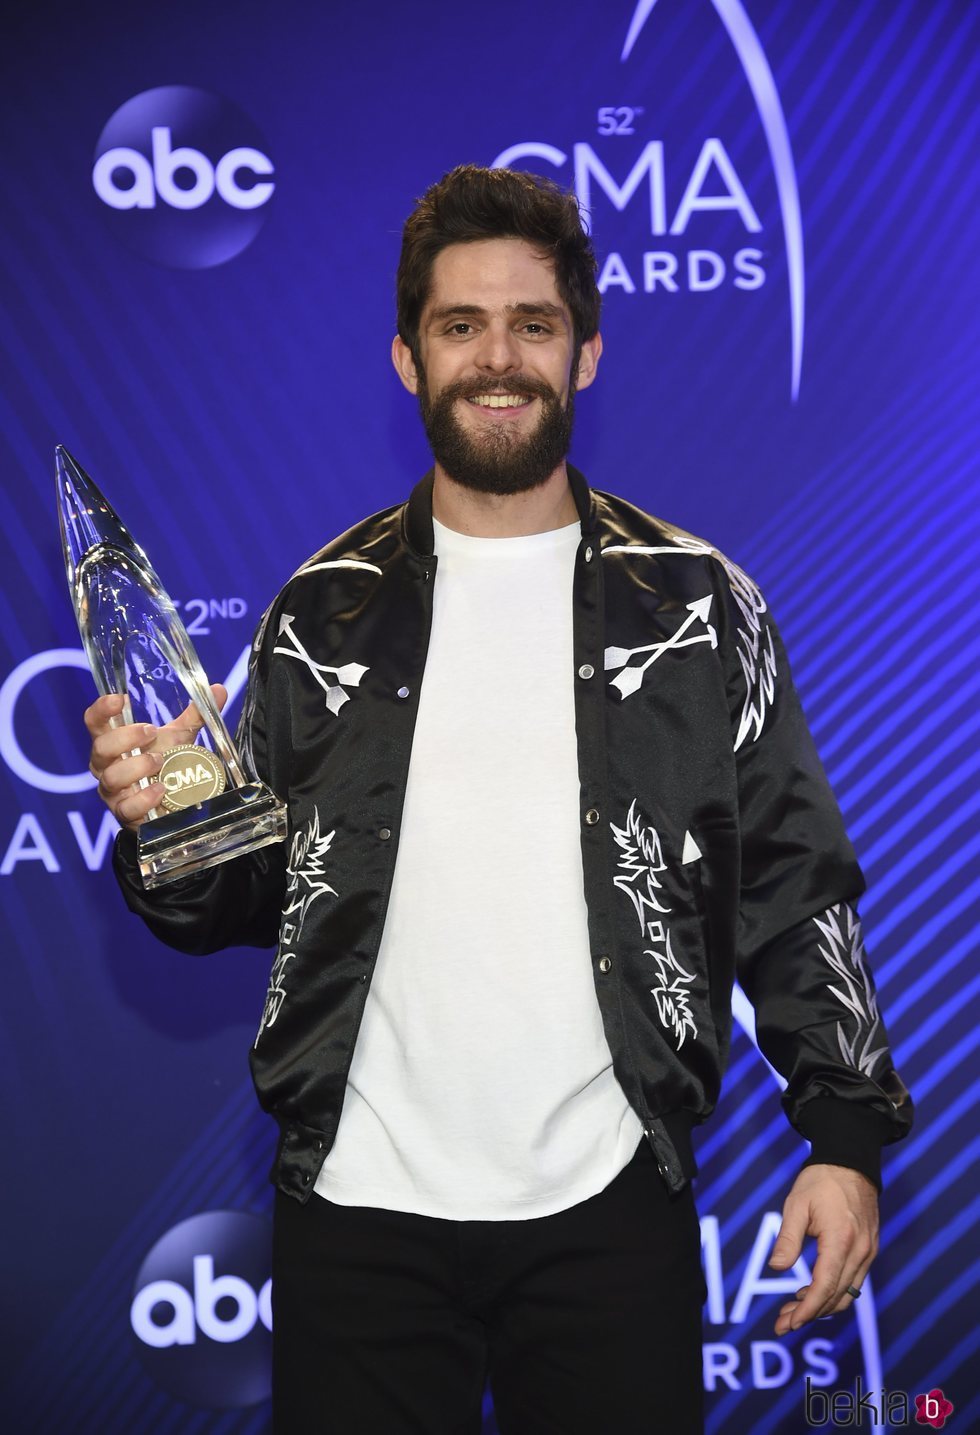 Thomas Rhett posando con su premio de los Country Music Association Awards 2018